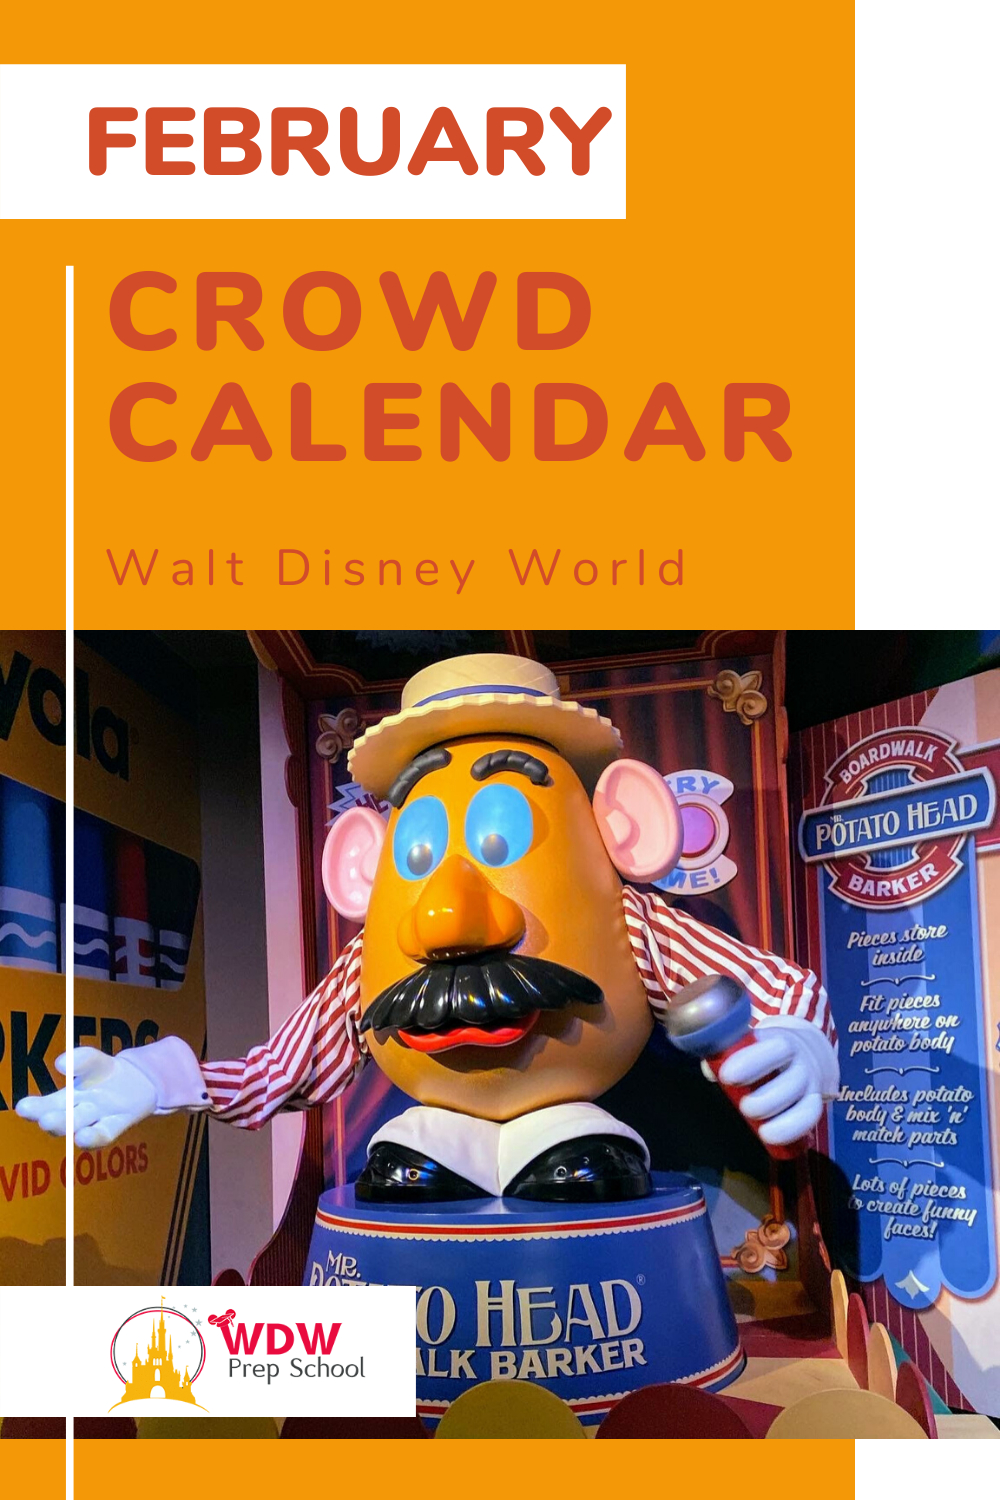 February 2022 At Disney World (Crowd Calendar, Weather